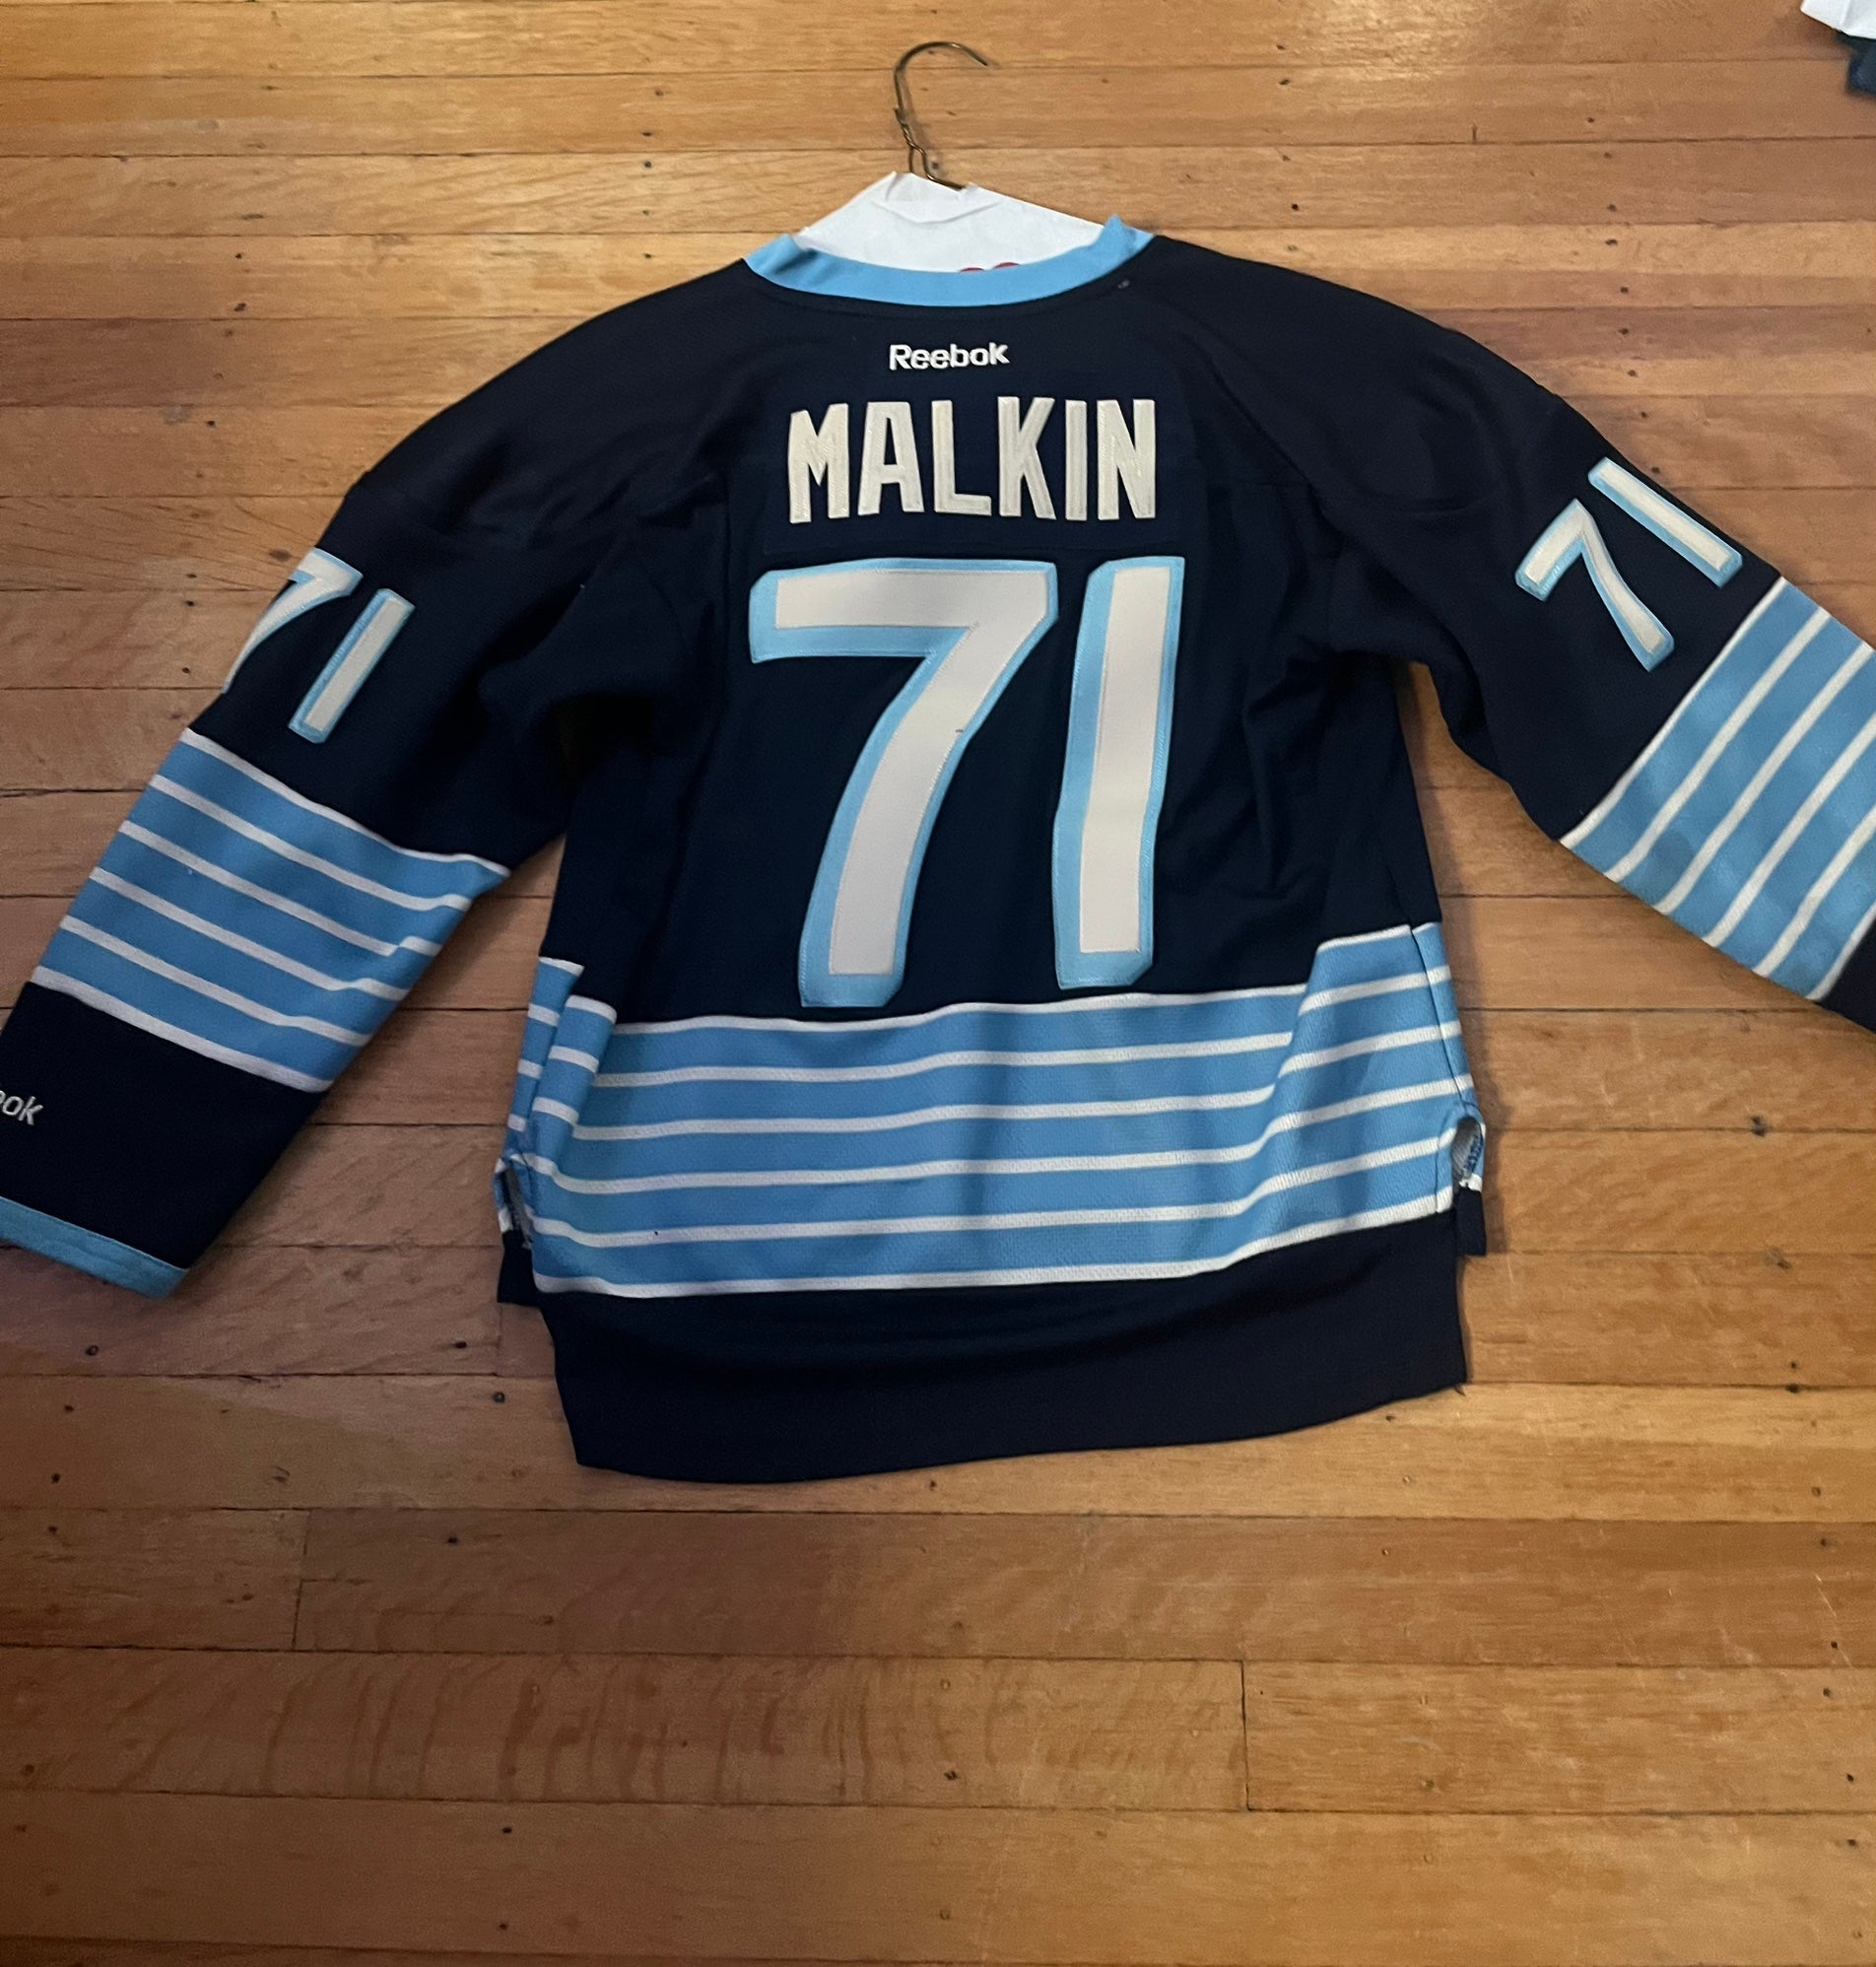 Evgeni Malkin Autographed Pittsburgh Penguins Authentic Pro Jersey - NHL  Auctions